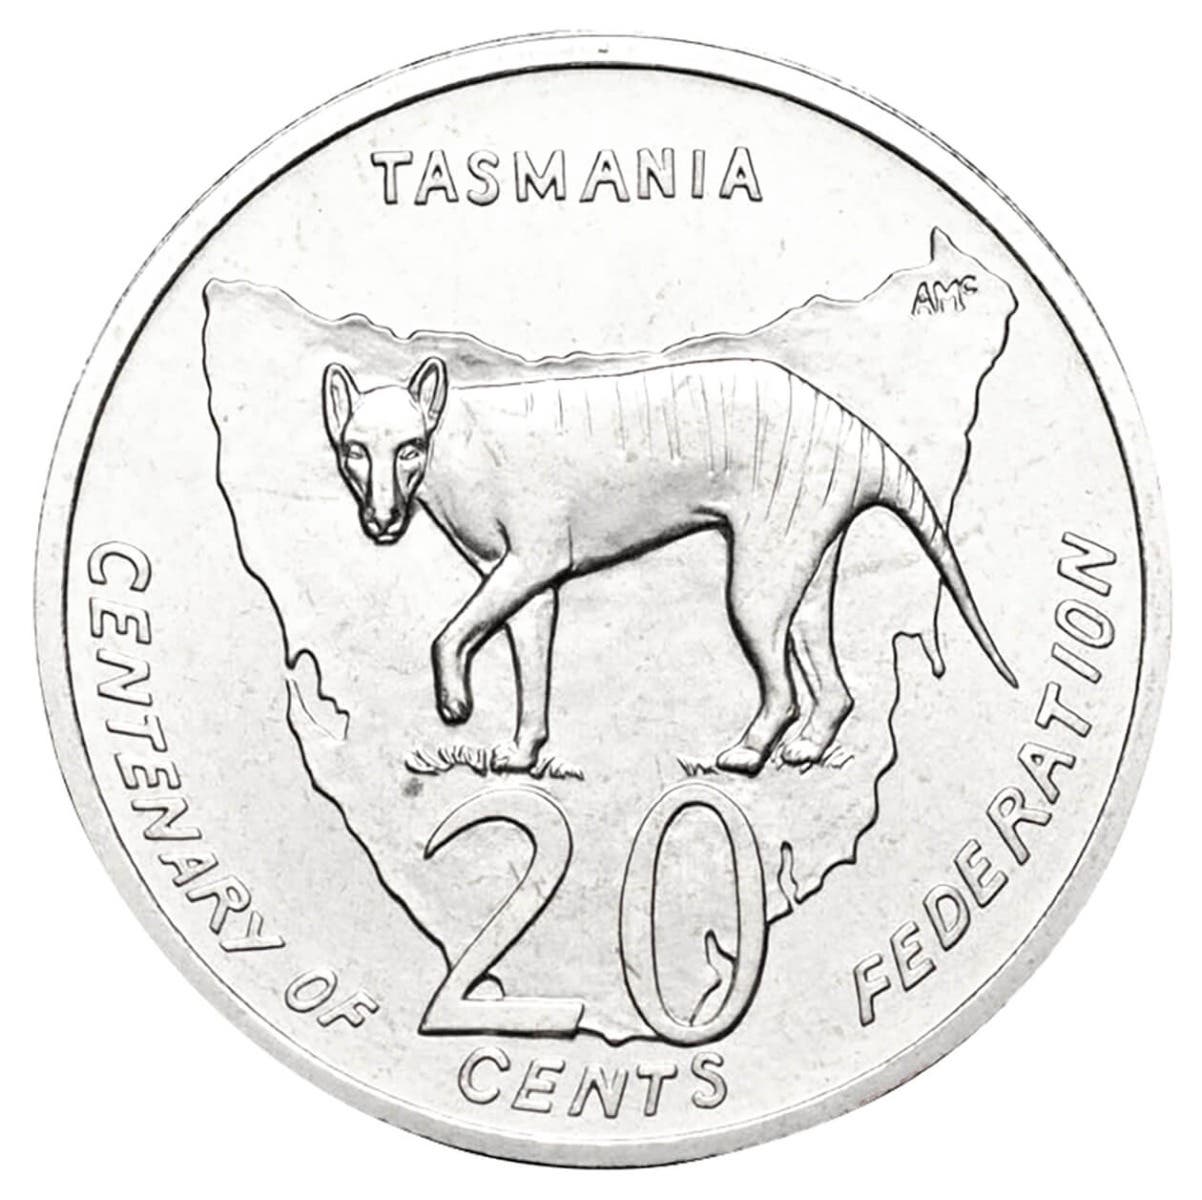 Centenary of Federation 2001 20c Tasmania Cu-Ni Coin Pack